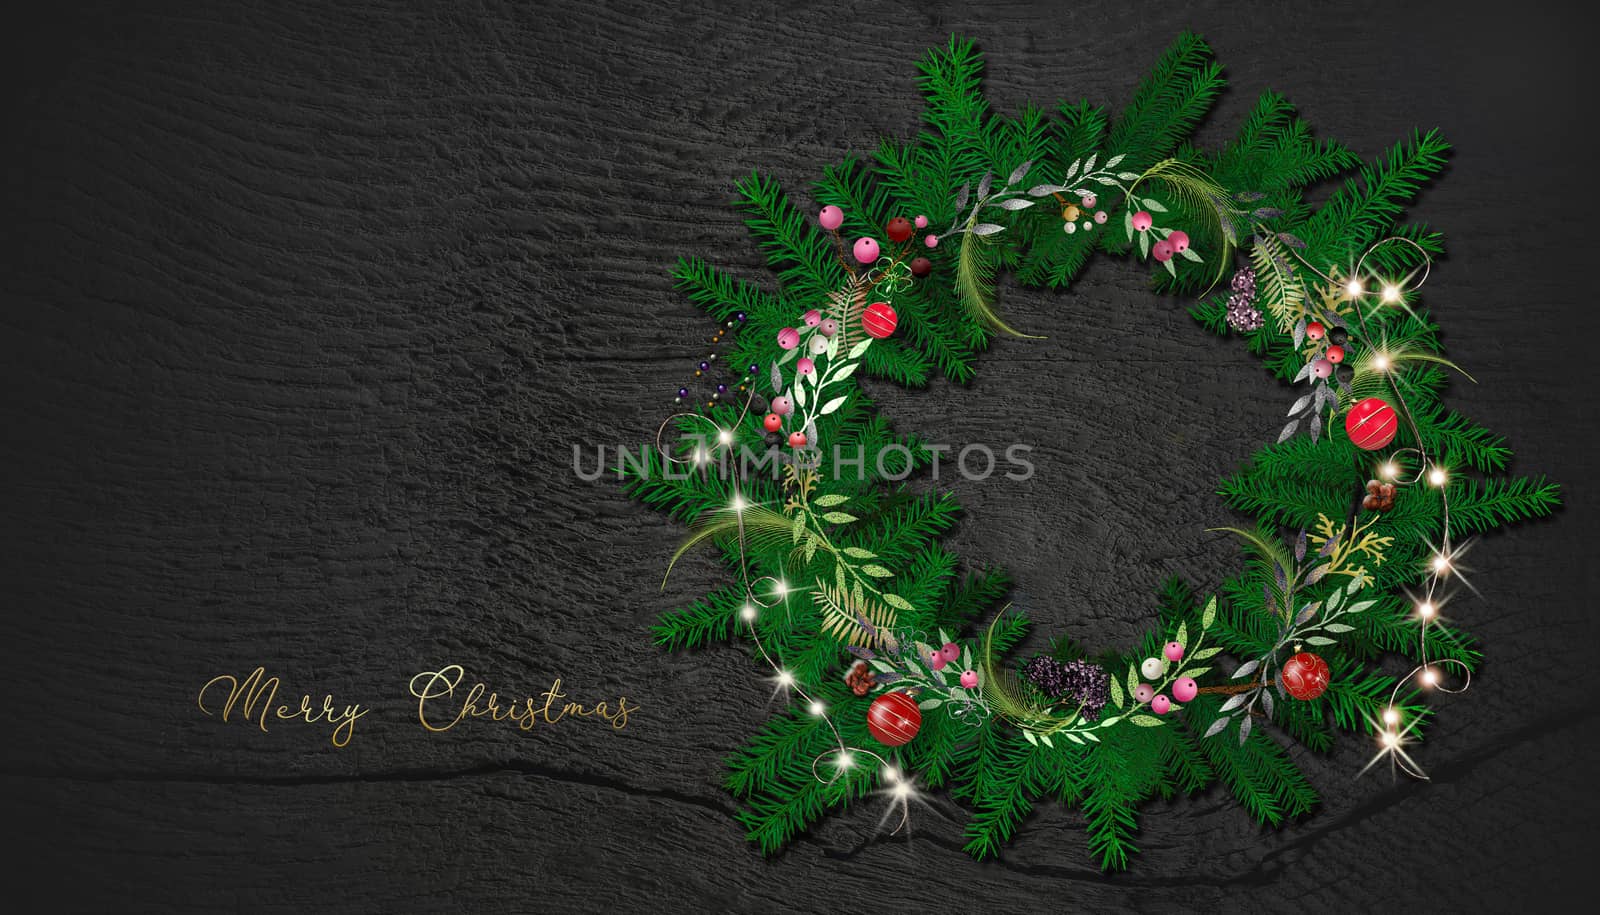 Christmas wreath for holiday card by NelliPolk